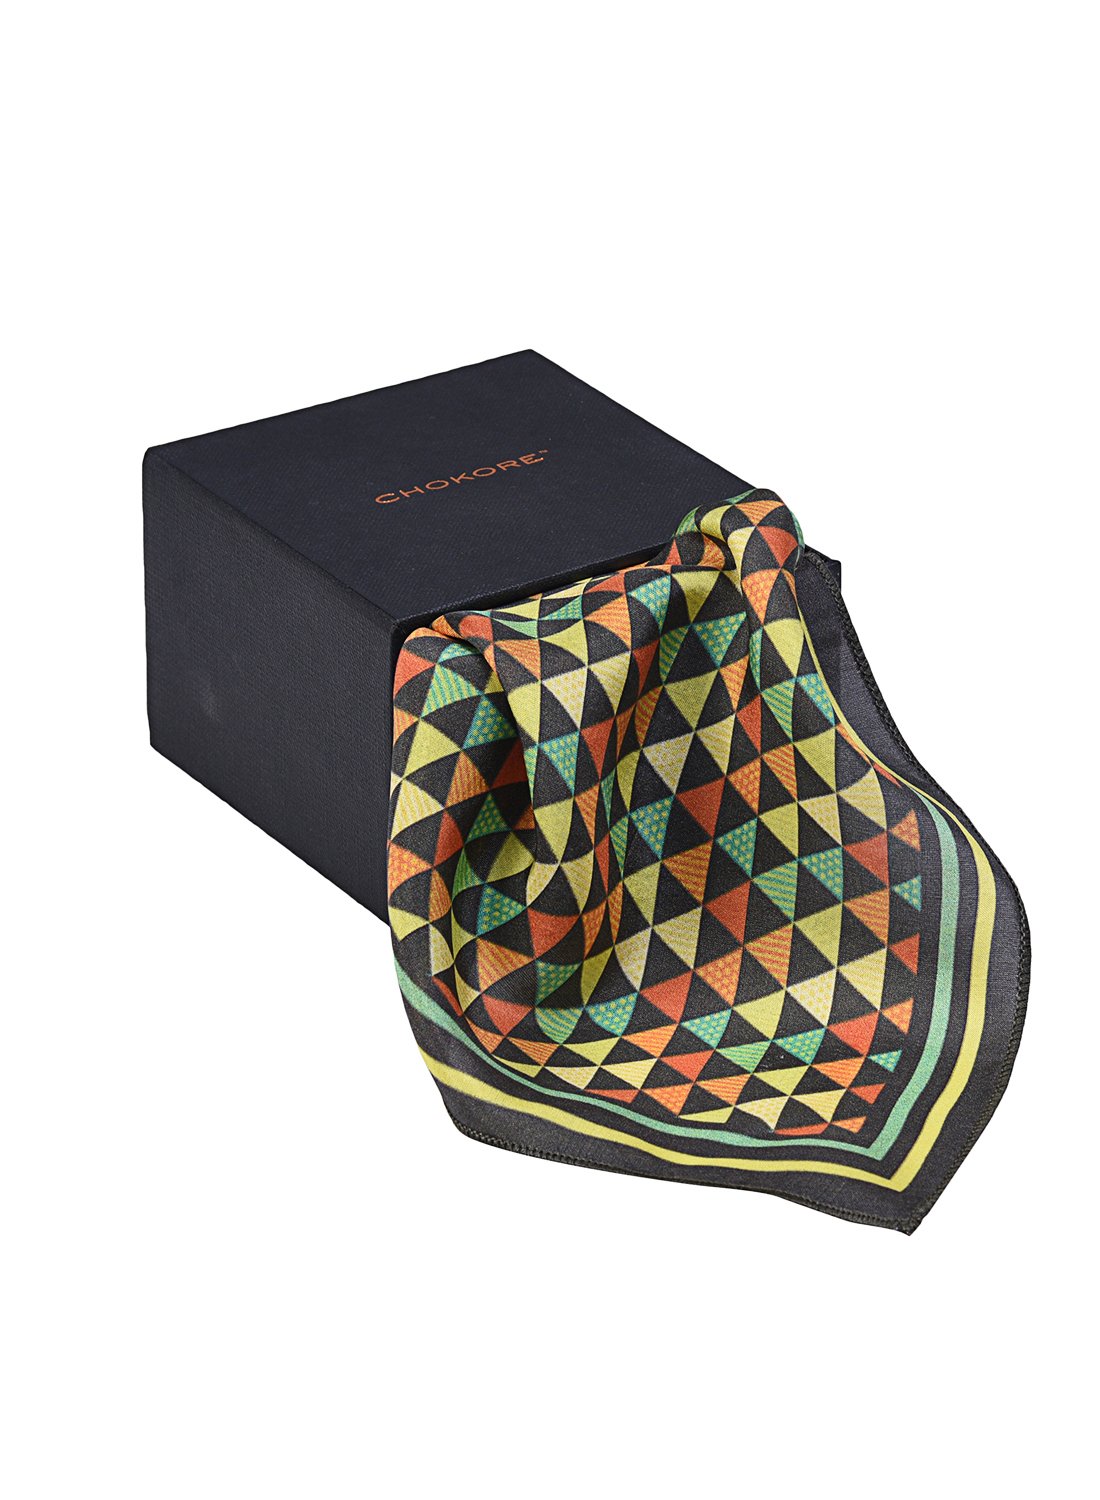 Chokore Multi-coloured Silk Pocket Square from the Plaids line